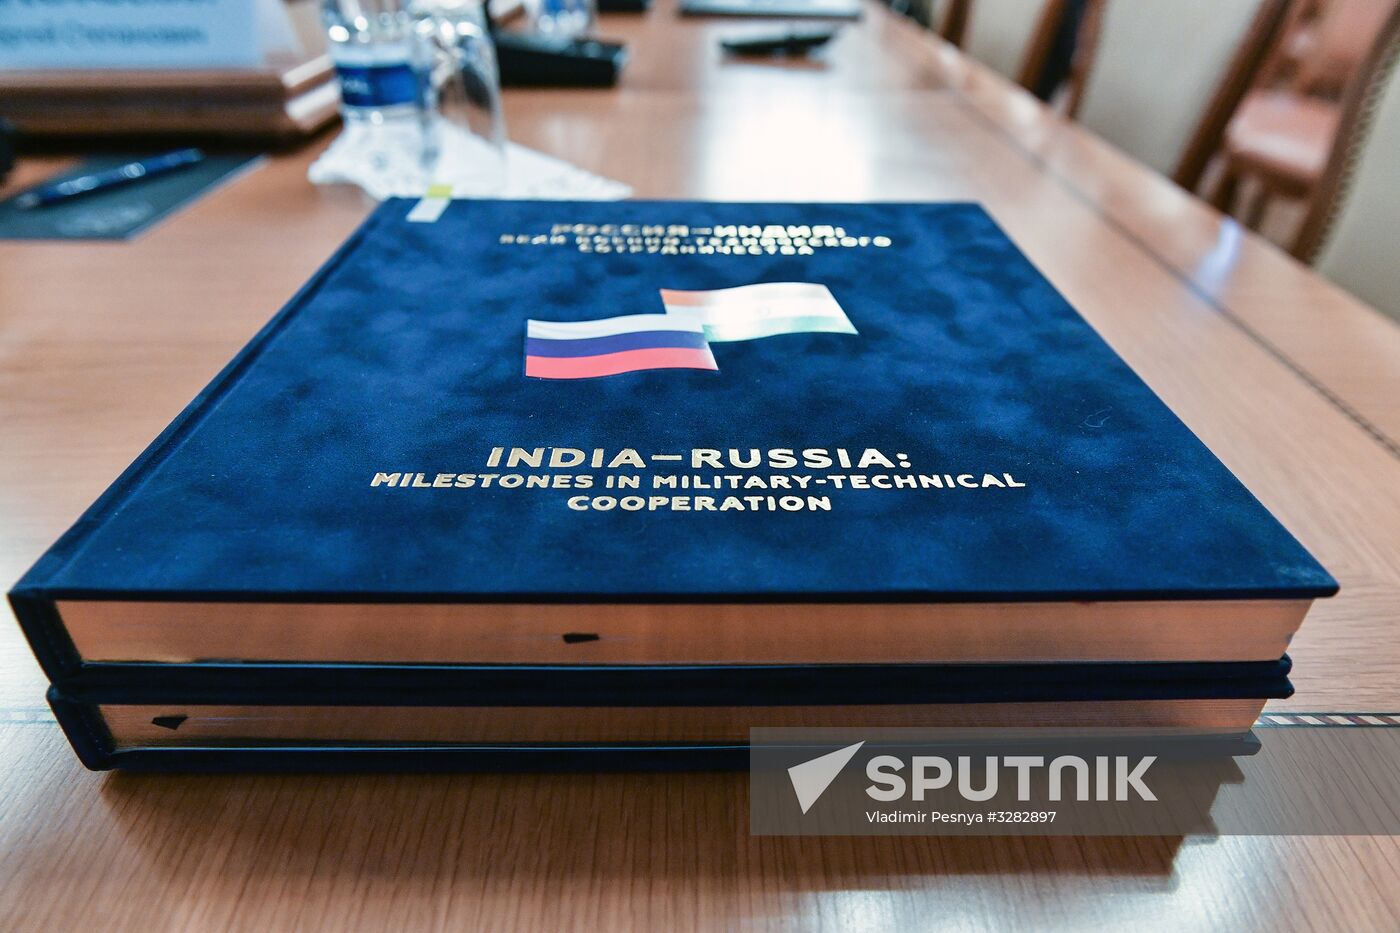 Book 'Russia-India: Milestones of Military-Technical Cooperation' presented